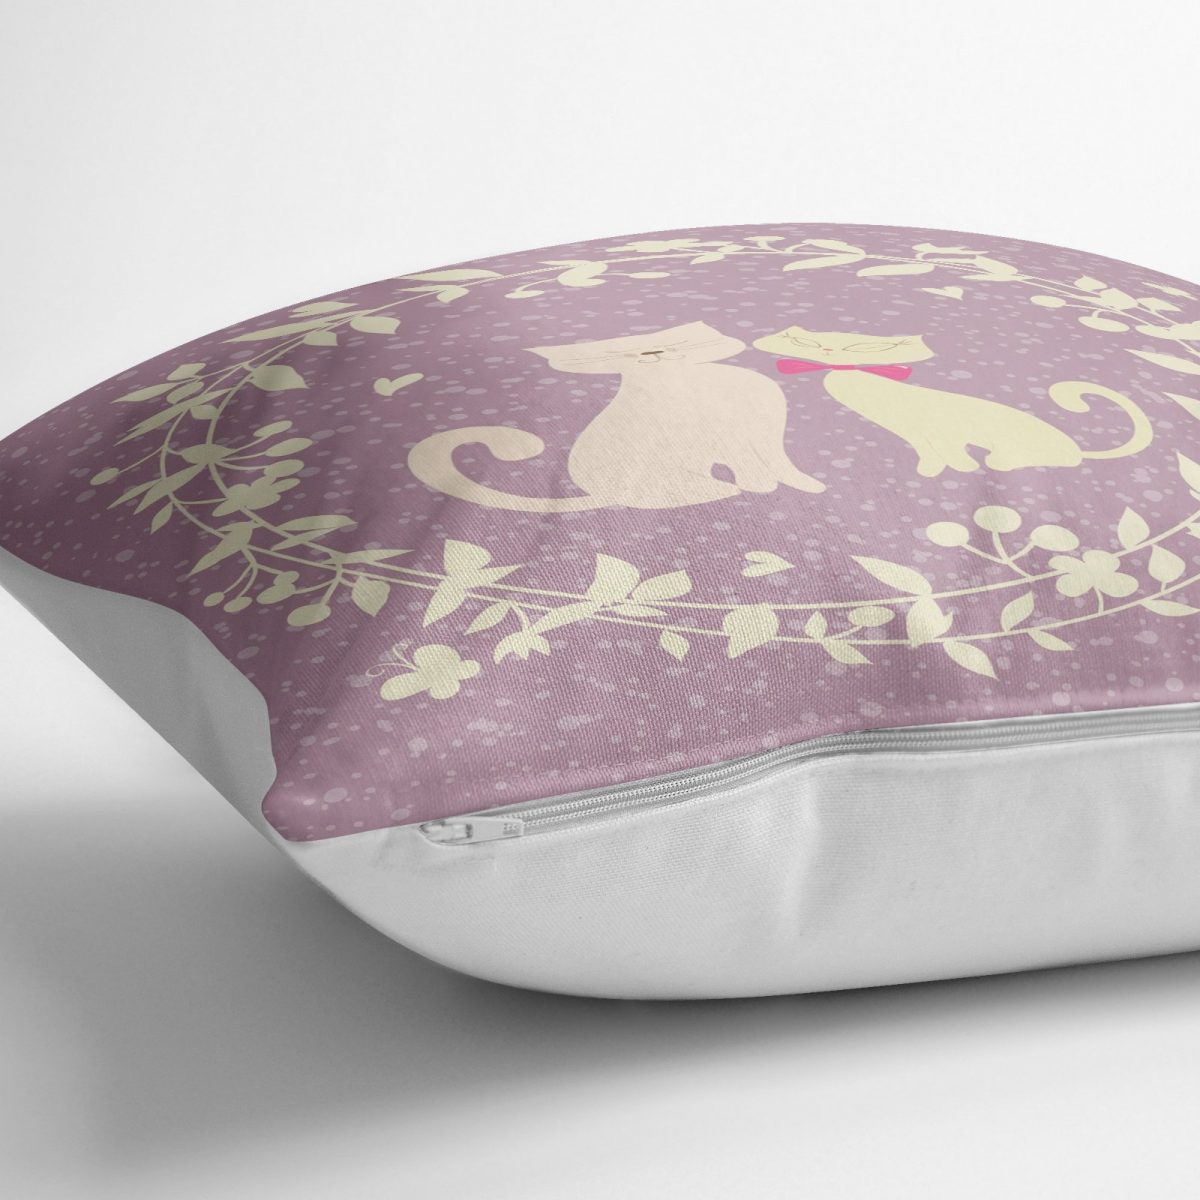 Mor Zeminli Kedicikler Desenli Dekoratif Kedi & Hayvan Minderi - 70 x 70 cm Realhomes